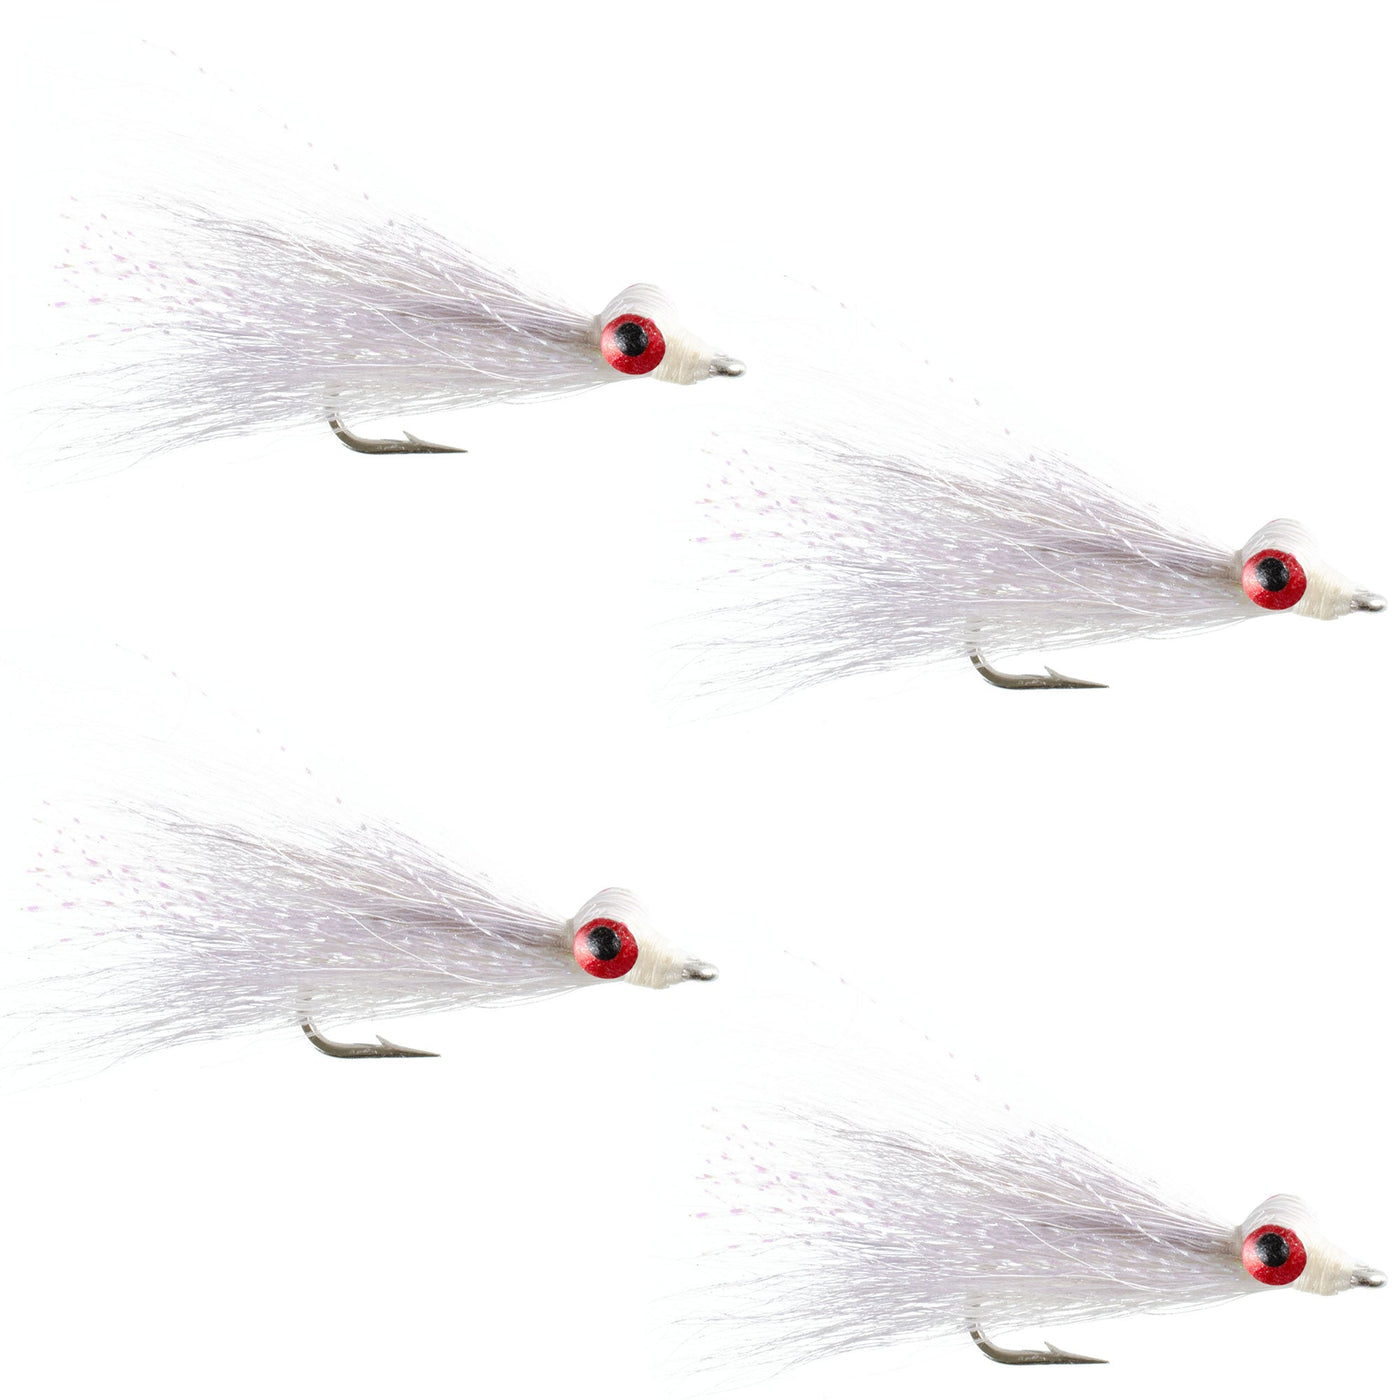 Clousers Deep Minnow White - Streamer Fly Fishing Flies - 4 Saltwater and Bass Flies - Hook Size 1/0